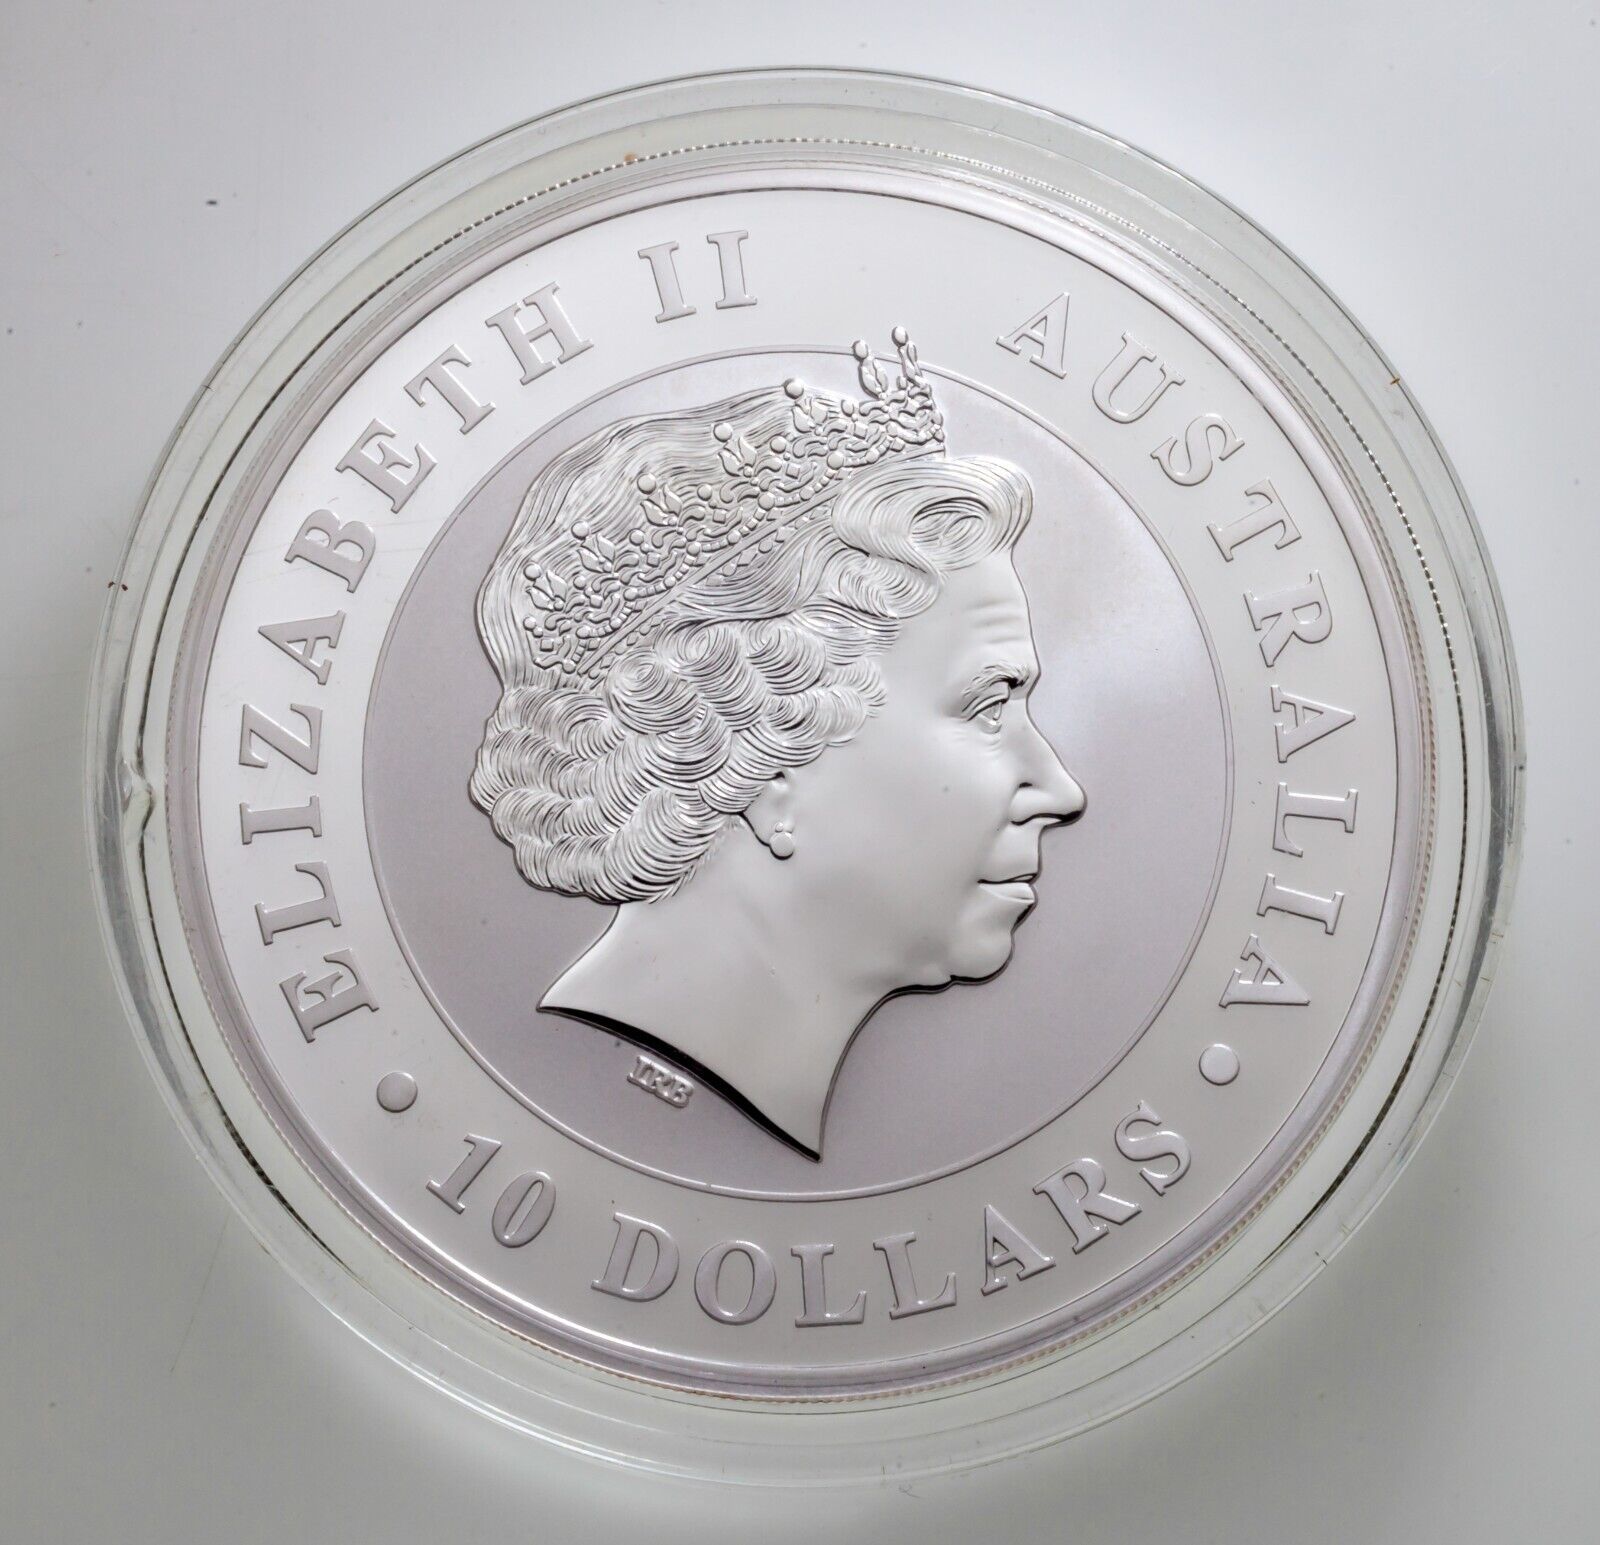 Primary image for 2016 Australia $10 Coin Silver 10oz Kookaburra Coin (BU Condition)